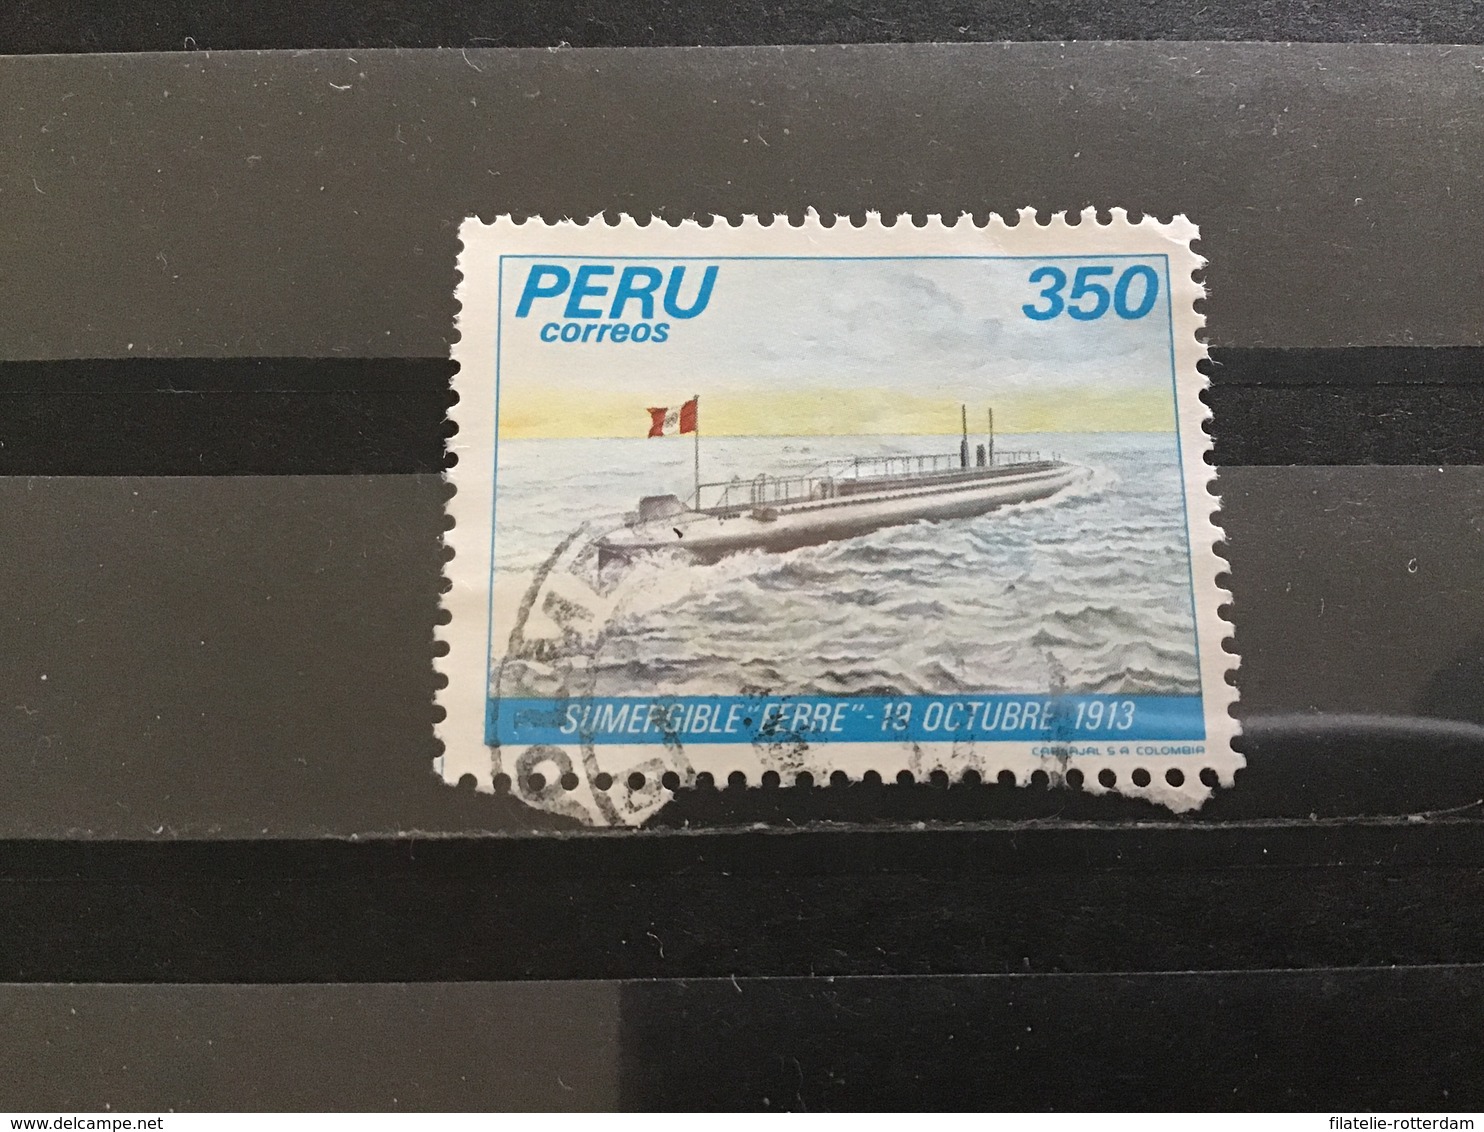 Peru - Onderzeeër Ferre (350) 1983 - Pérou